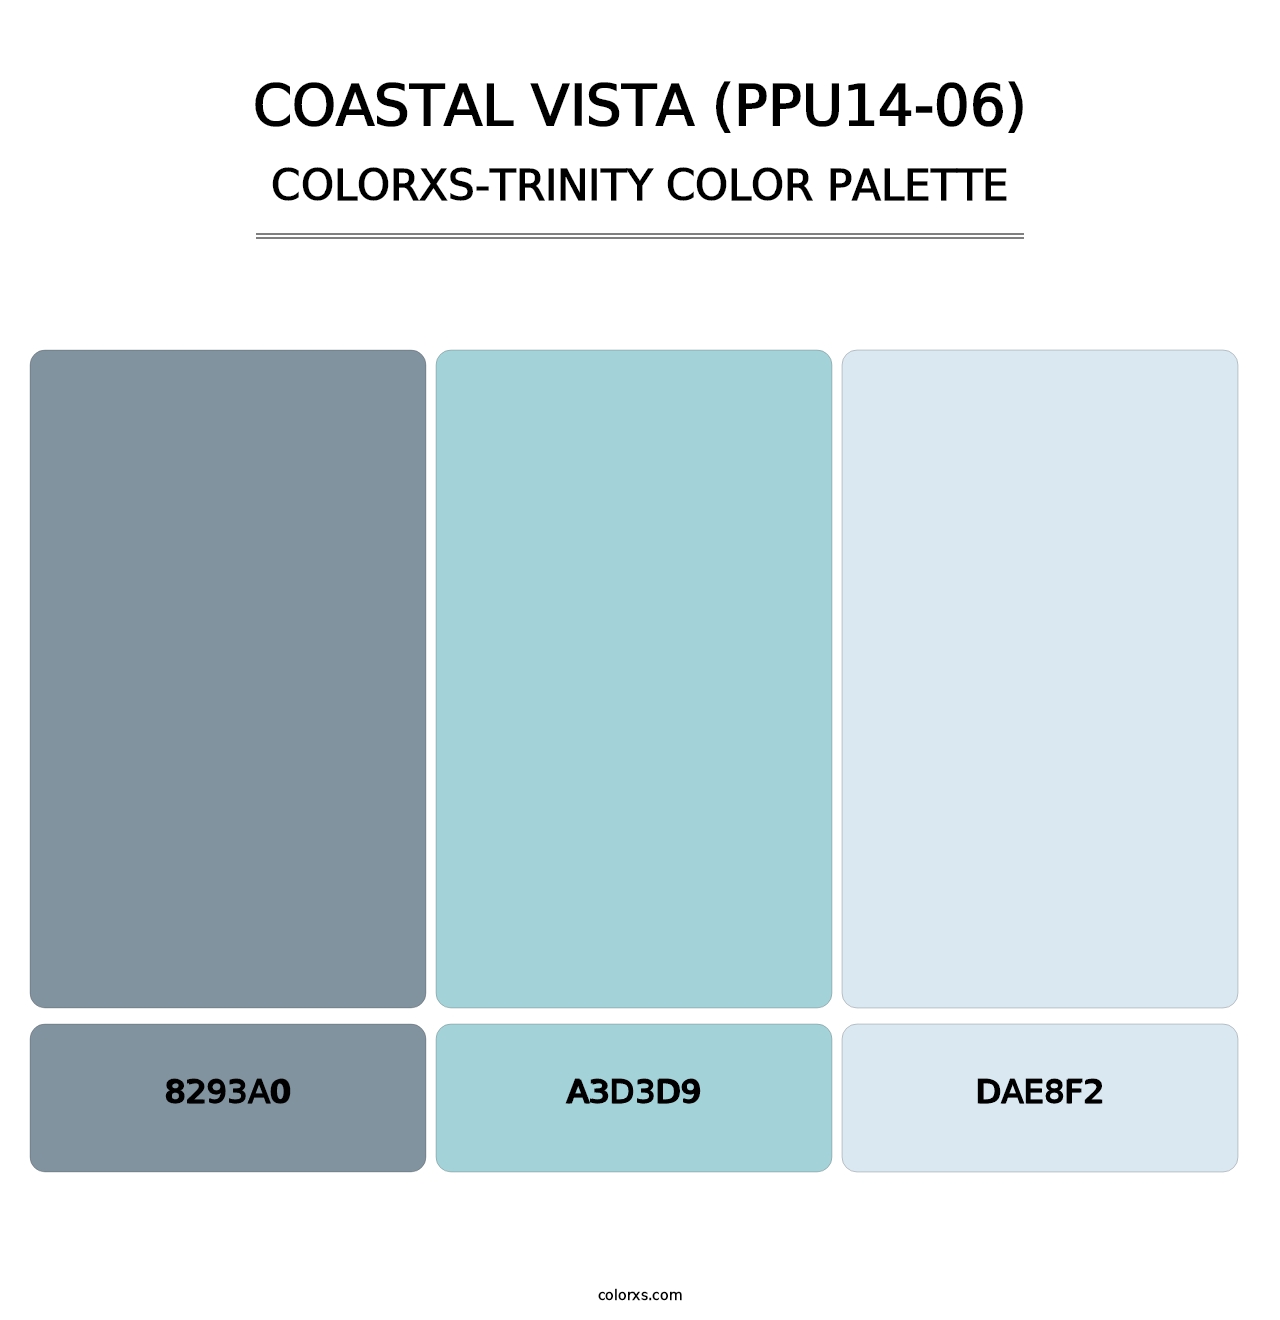 Coastal Vista (PPU14-06) - Colorxs Trinity Palette